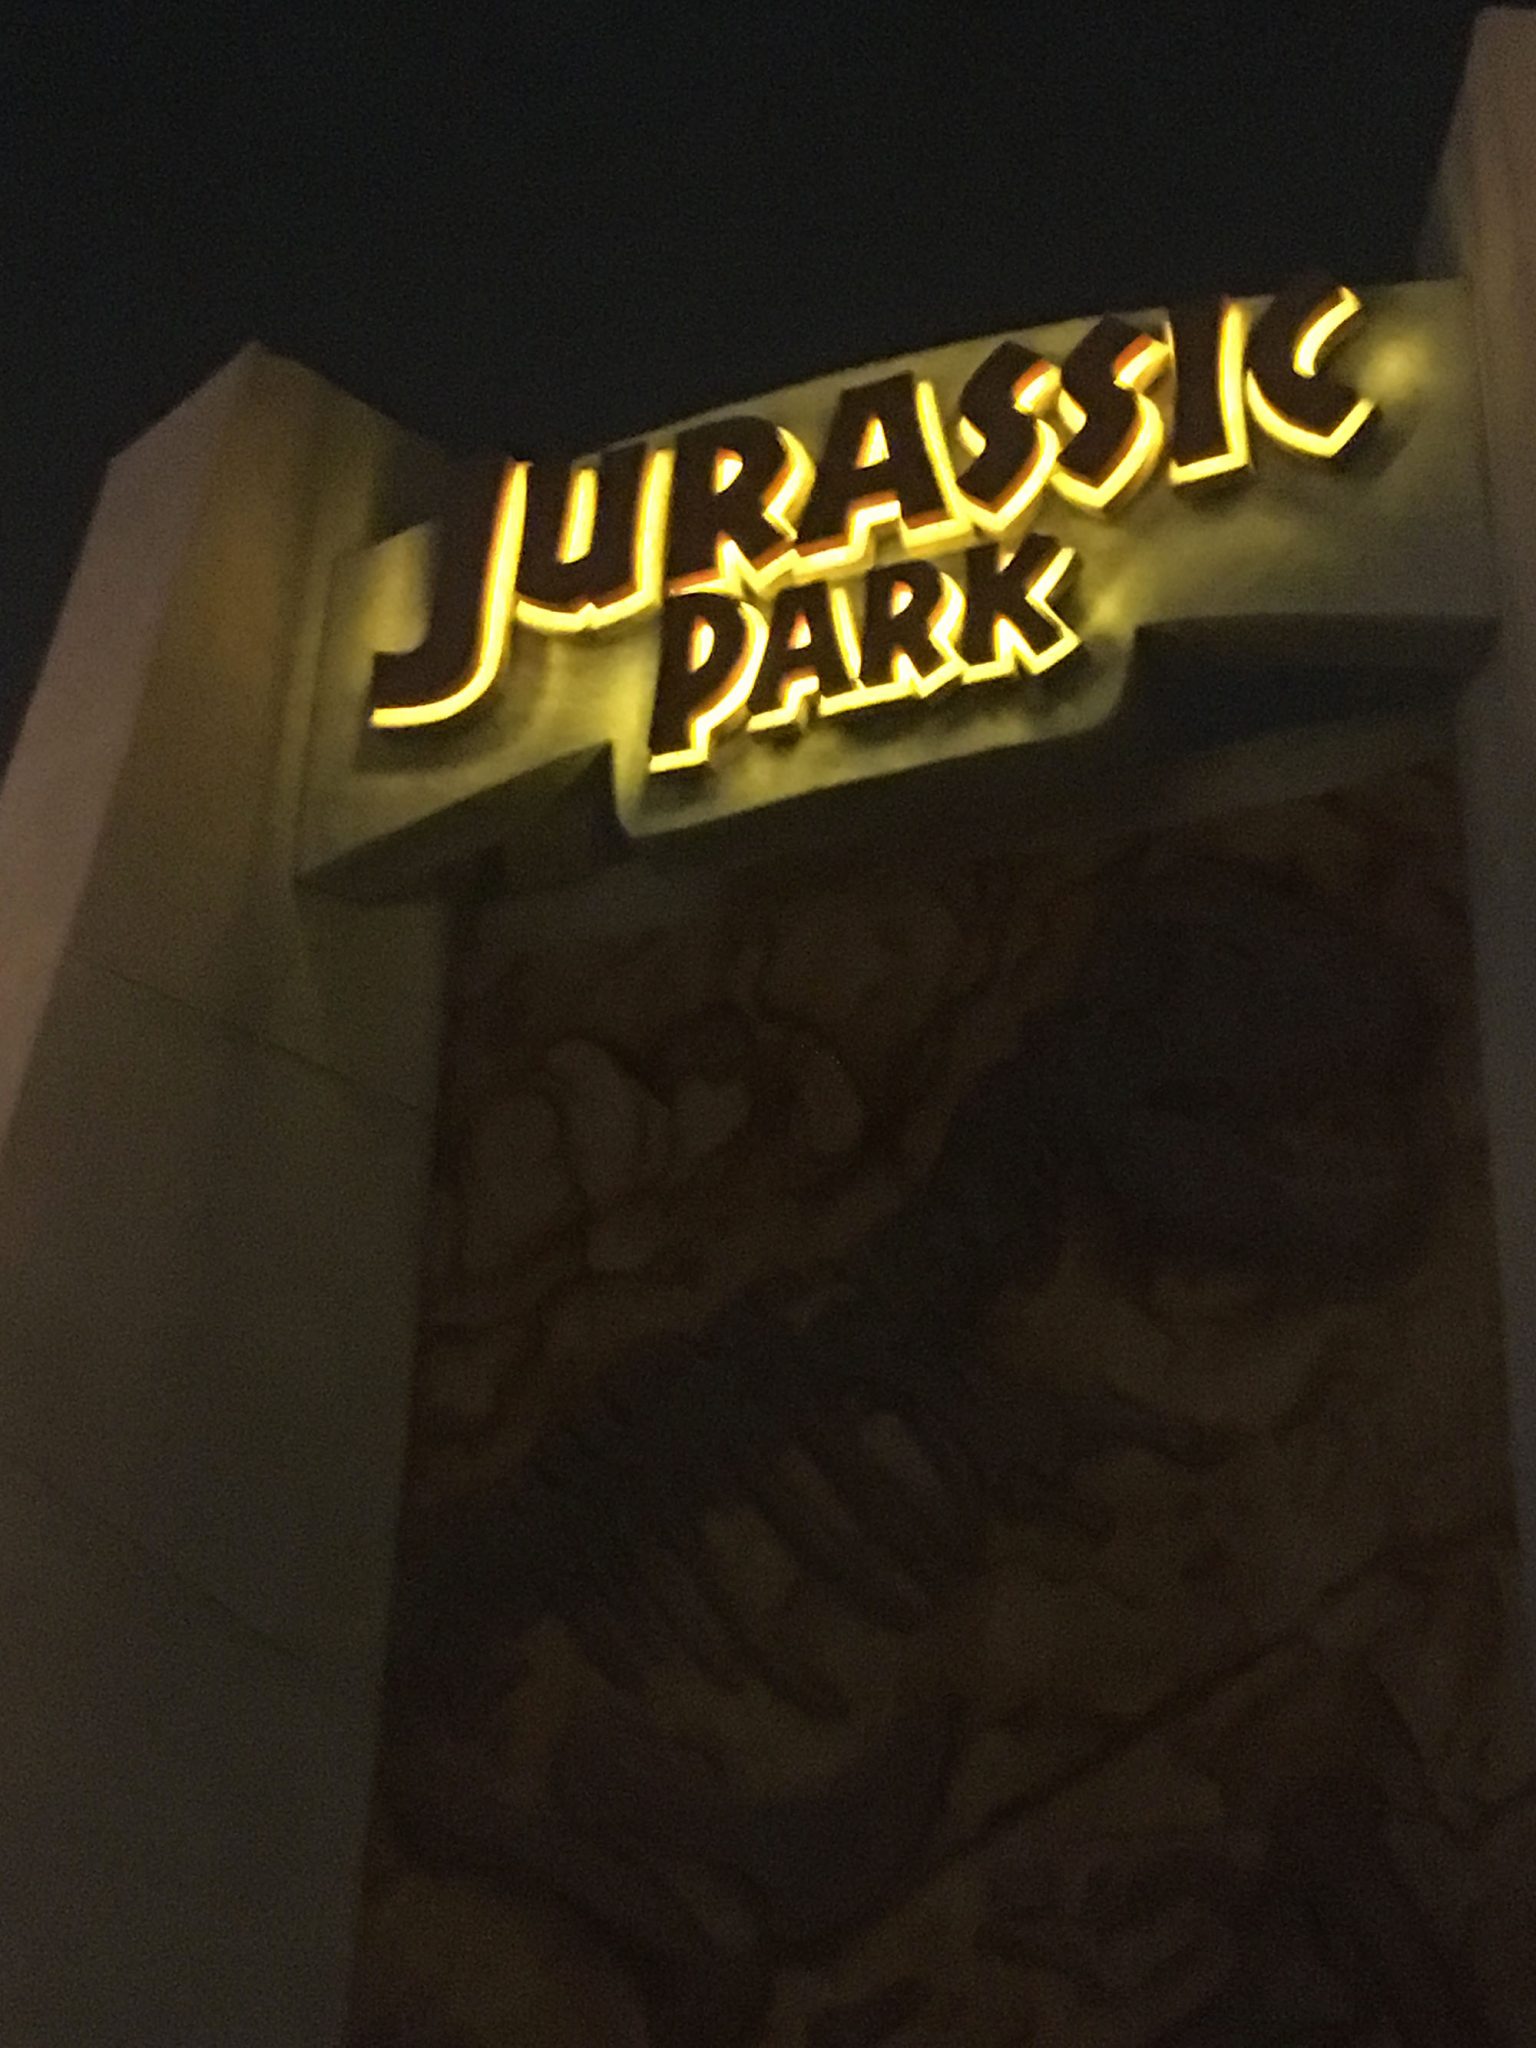 Jurassic Park sign for the #JurassicAliveMeetUp.